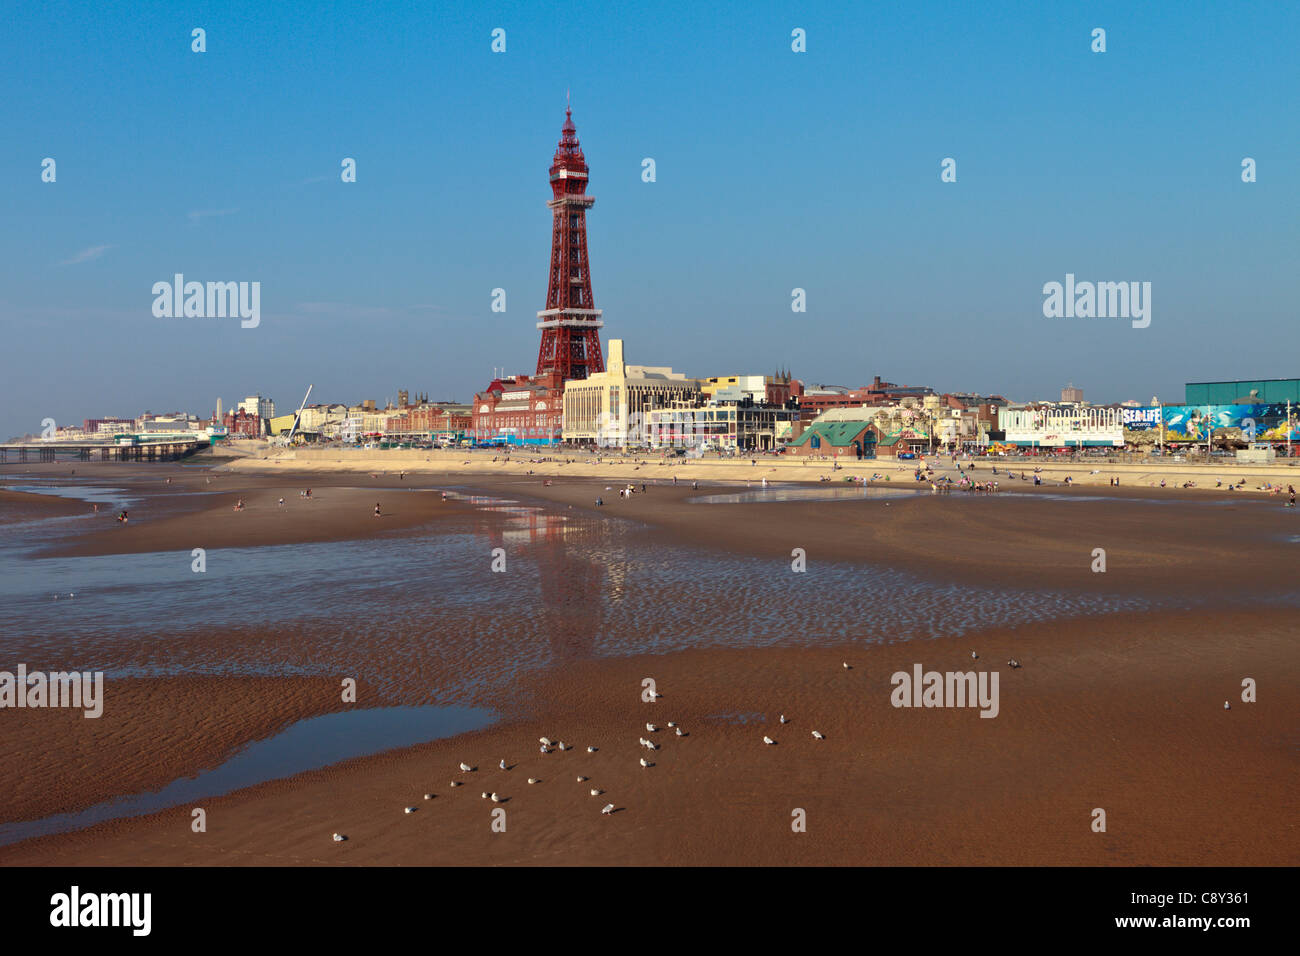 Tower and Beach, Blackpool, England Stock Photo